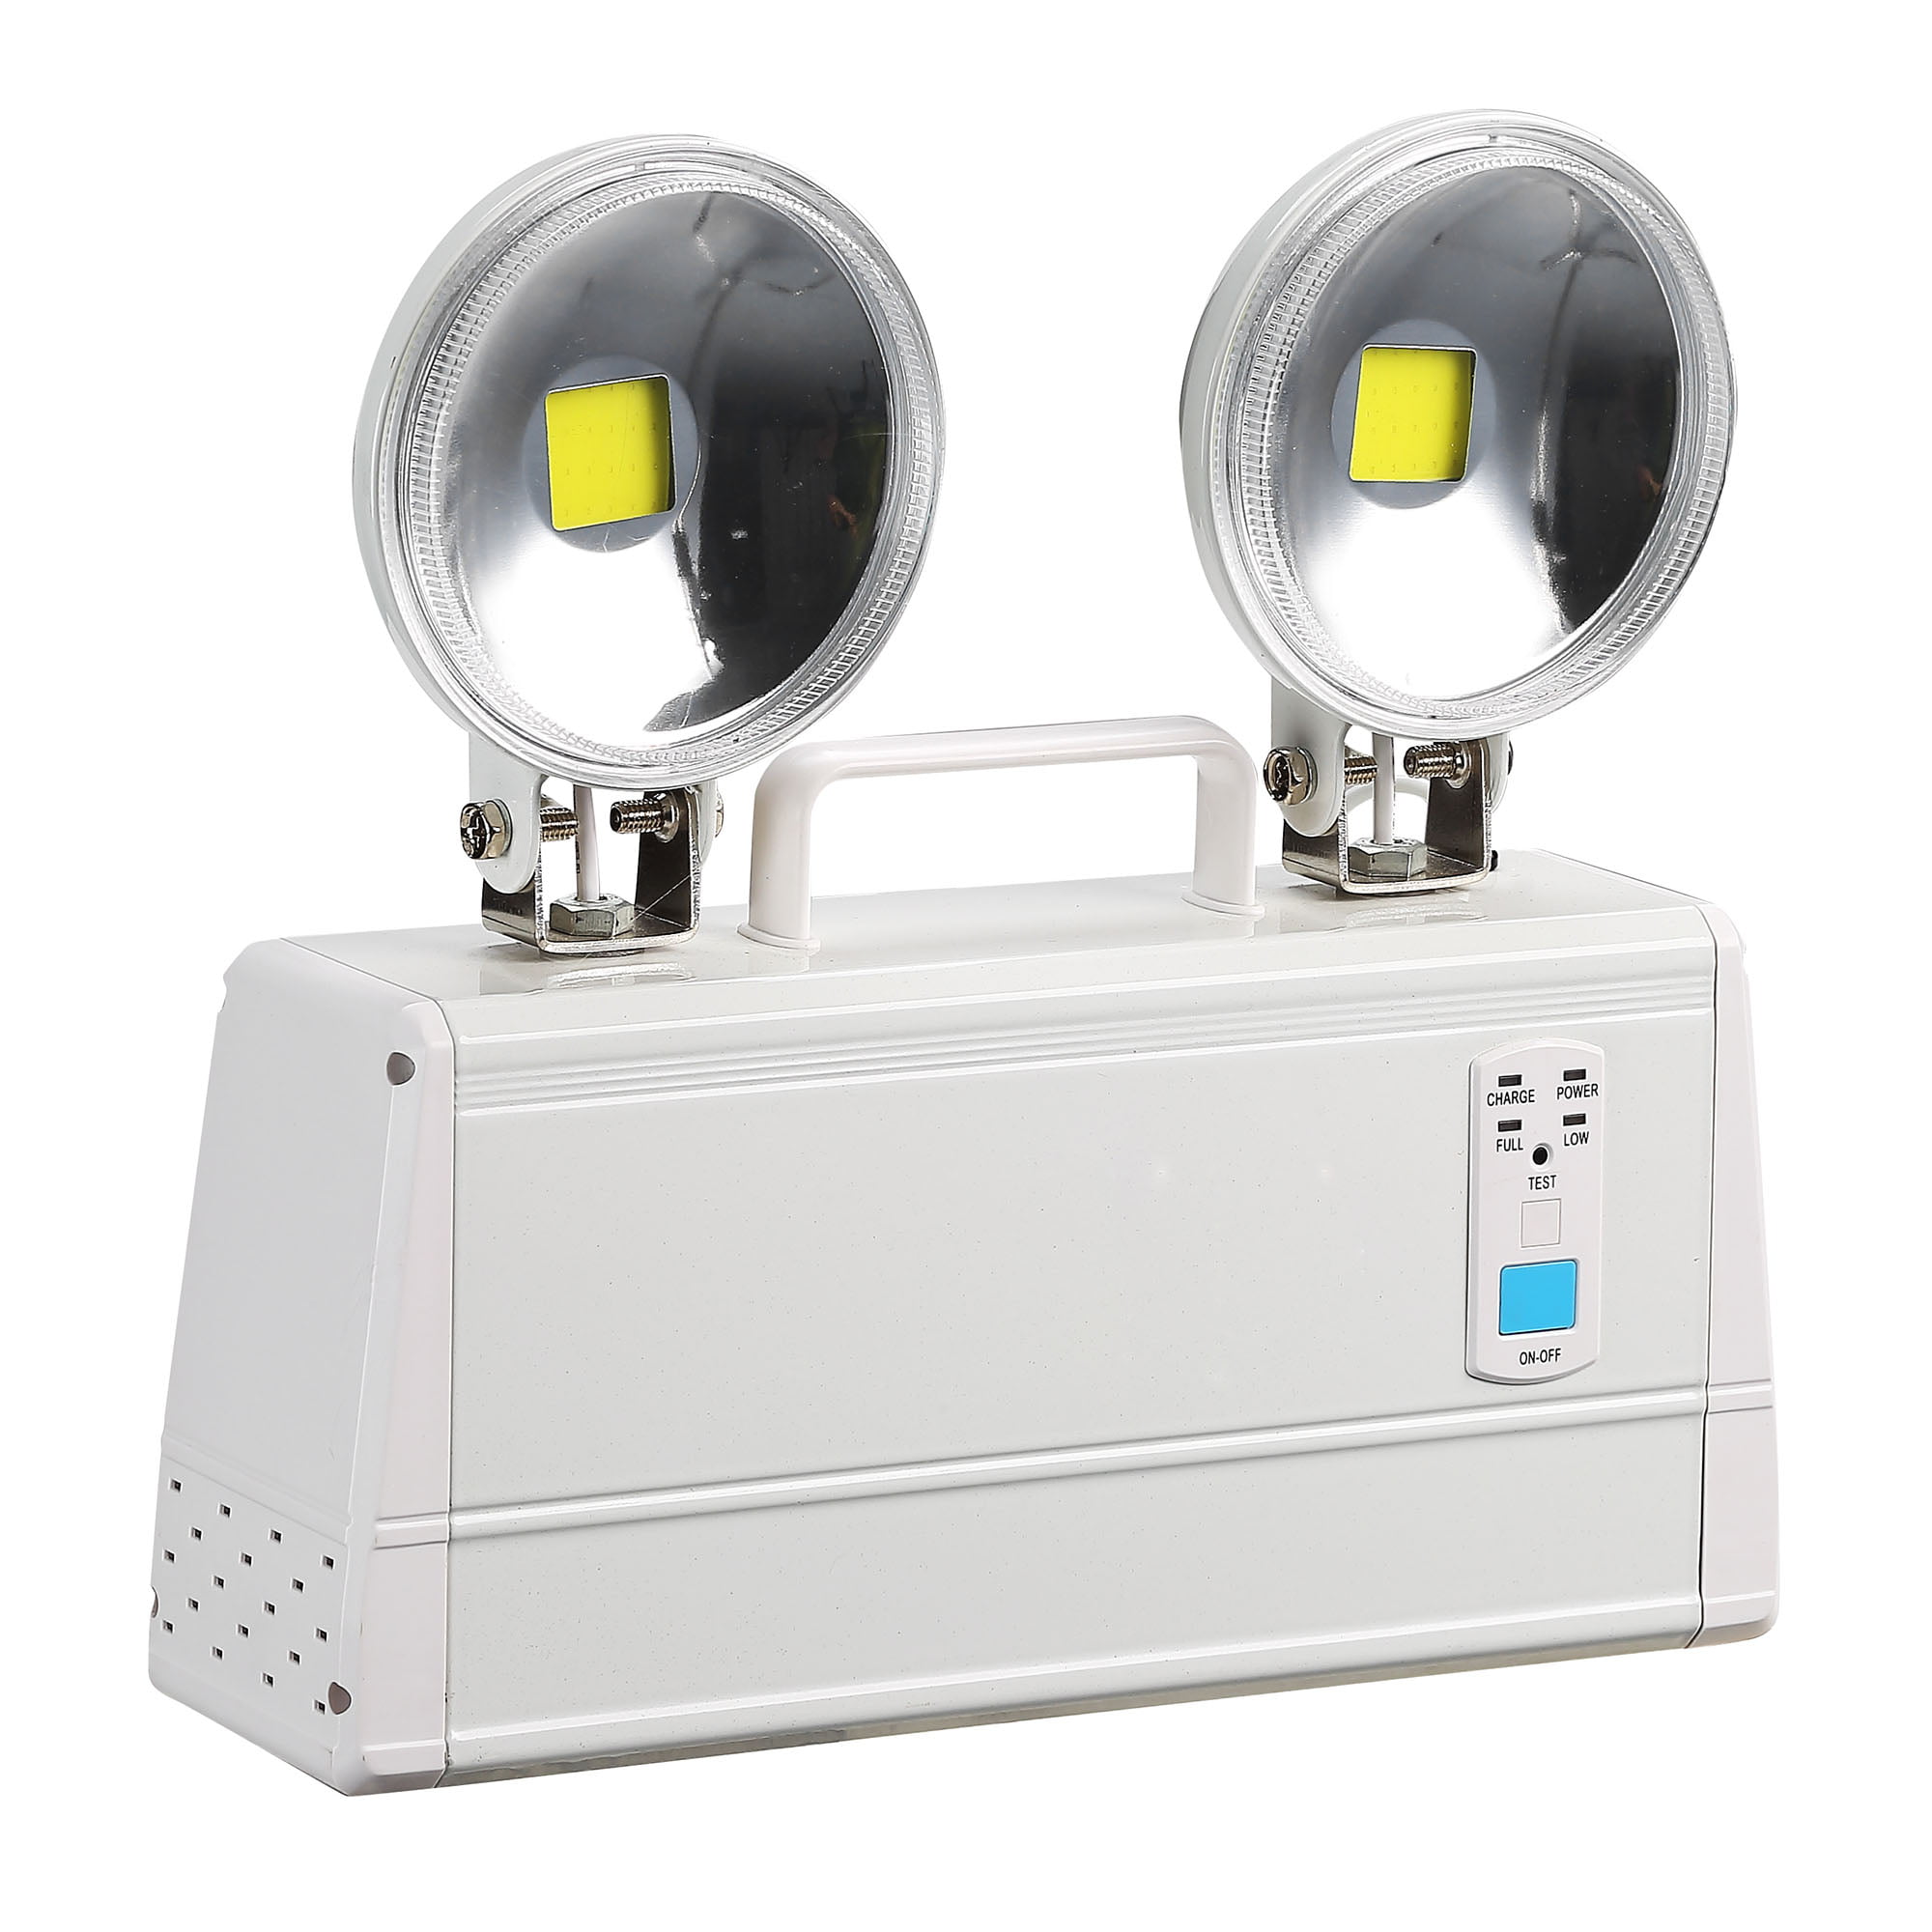 REFLECTOR LED 100W, 10000lm, IP65 IK08, 6500K 100-277VAC; Modelo: NV